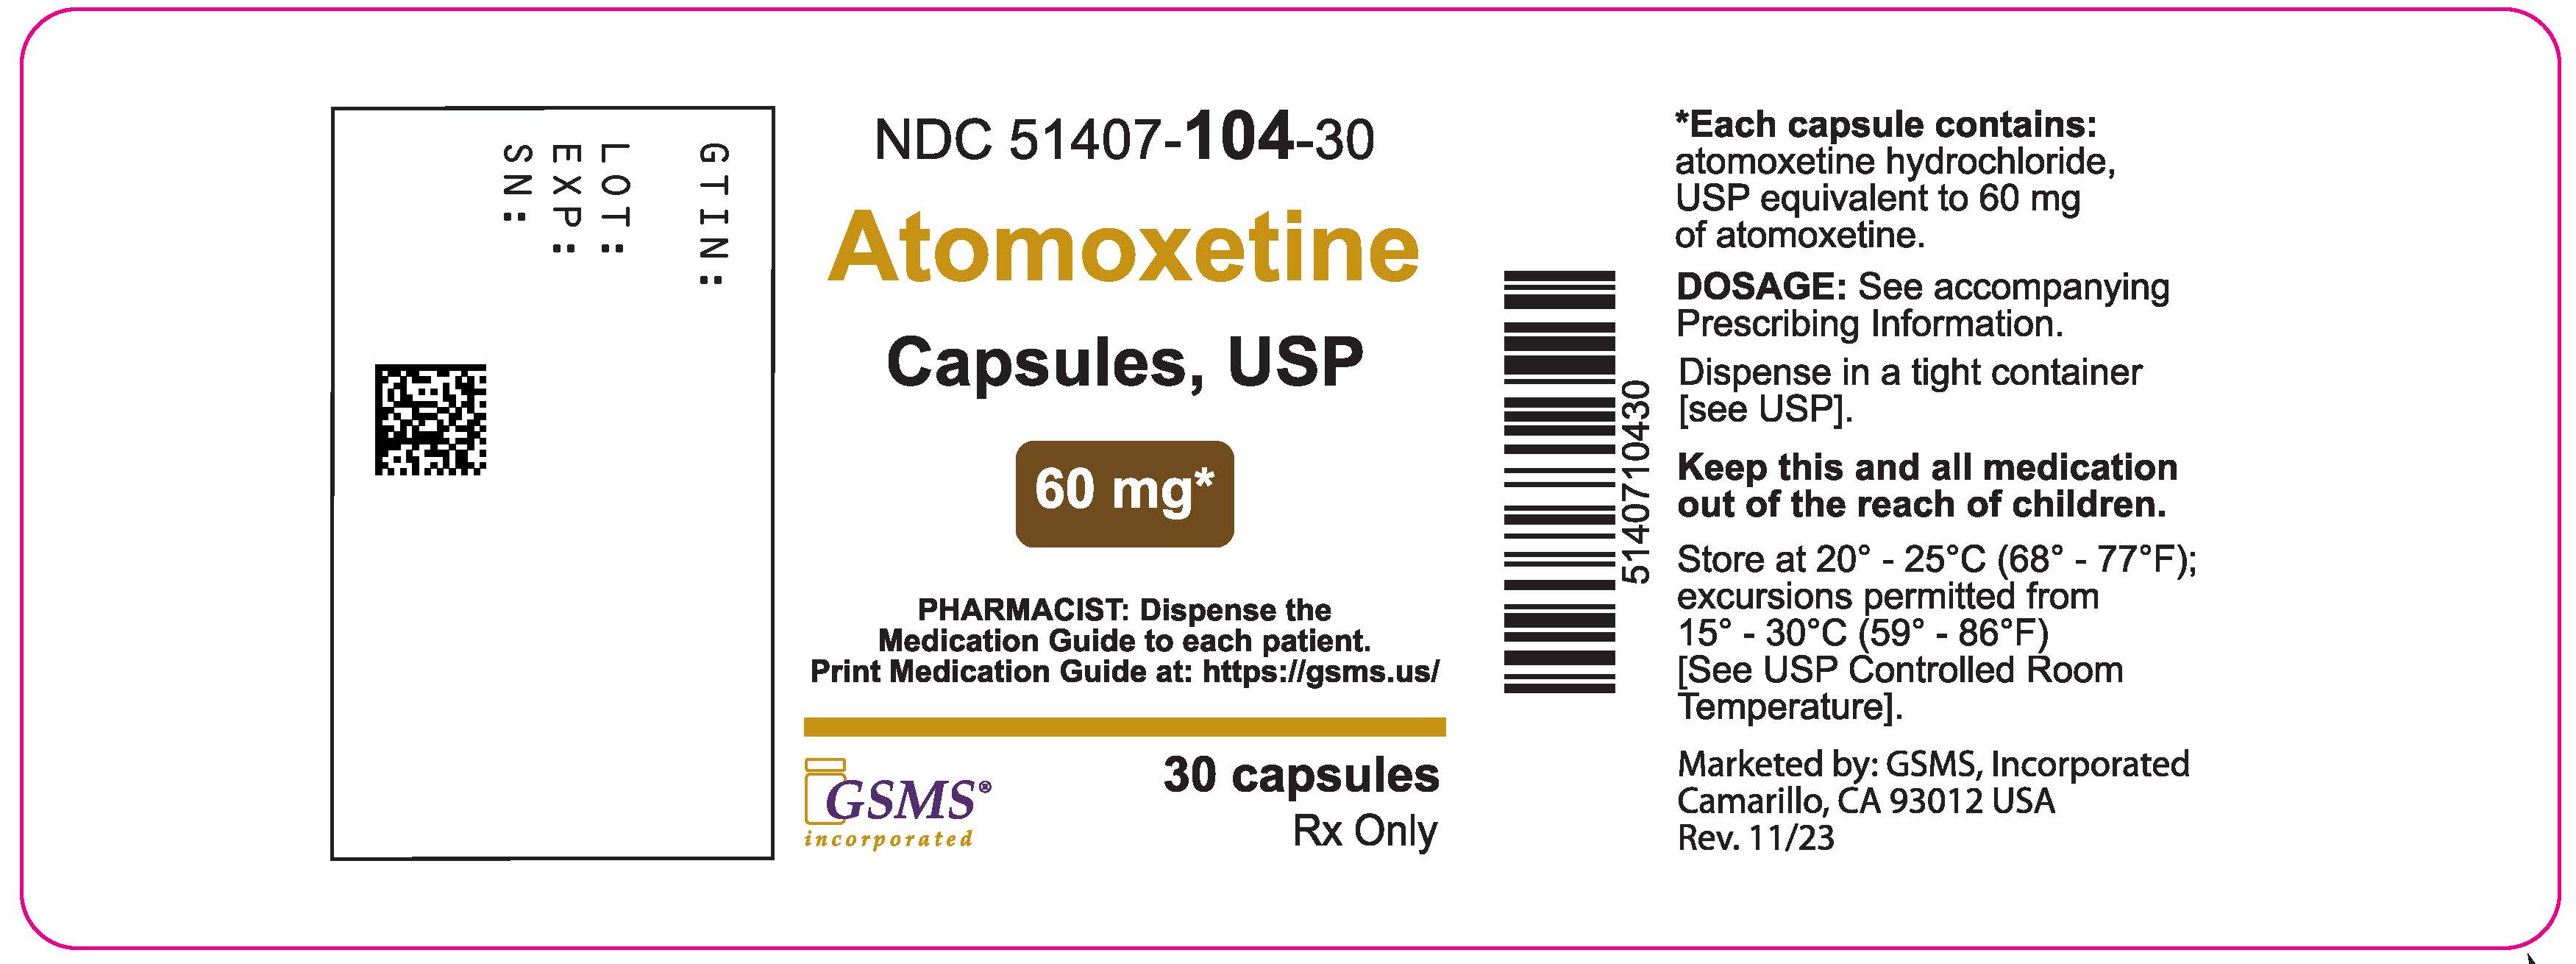 51407-104-30OL - Atomoxetine Caps - 30ct - Rev 1123.jpg